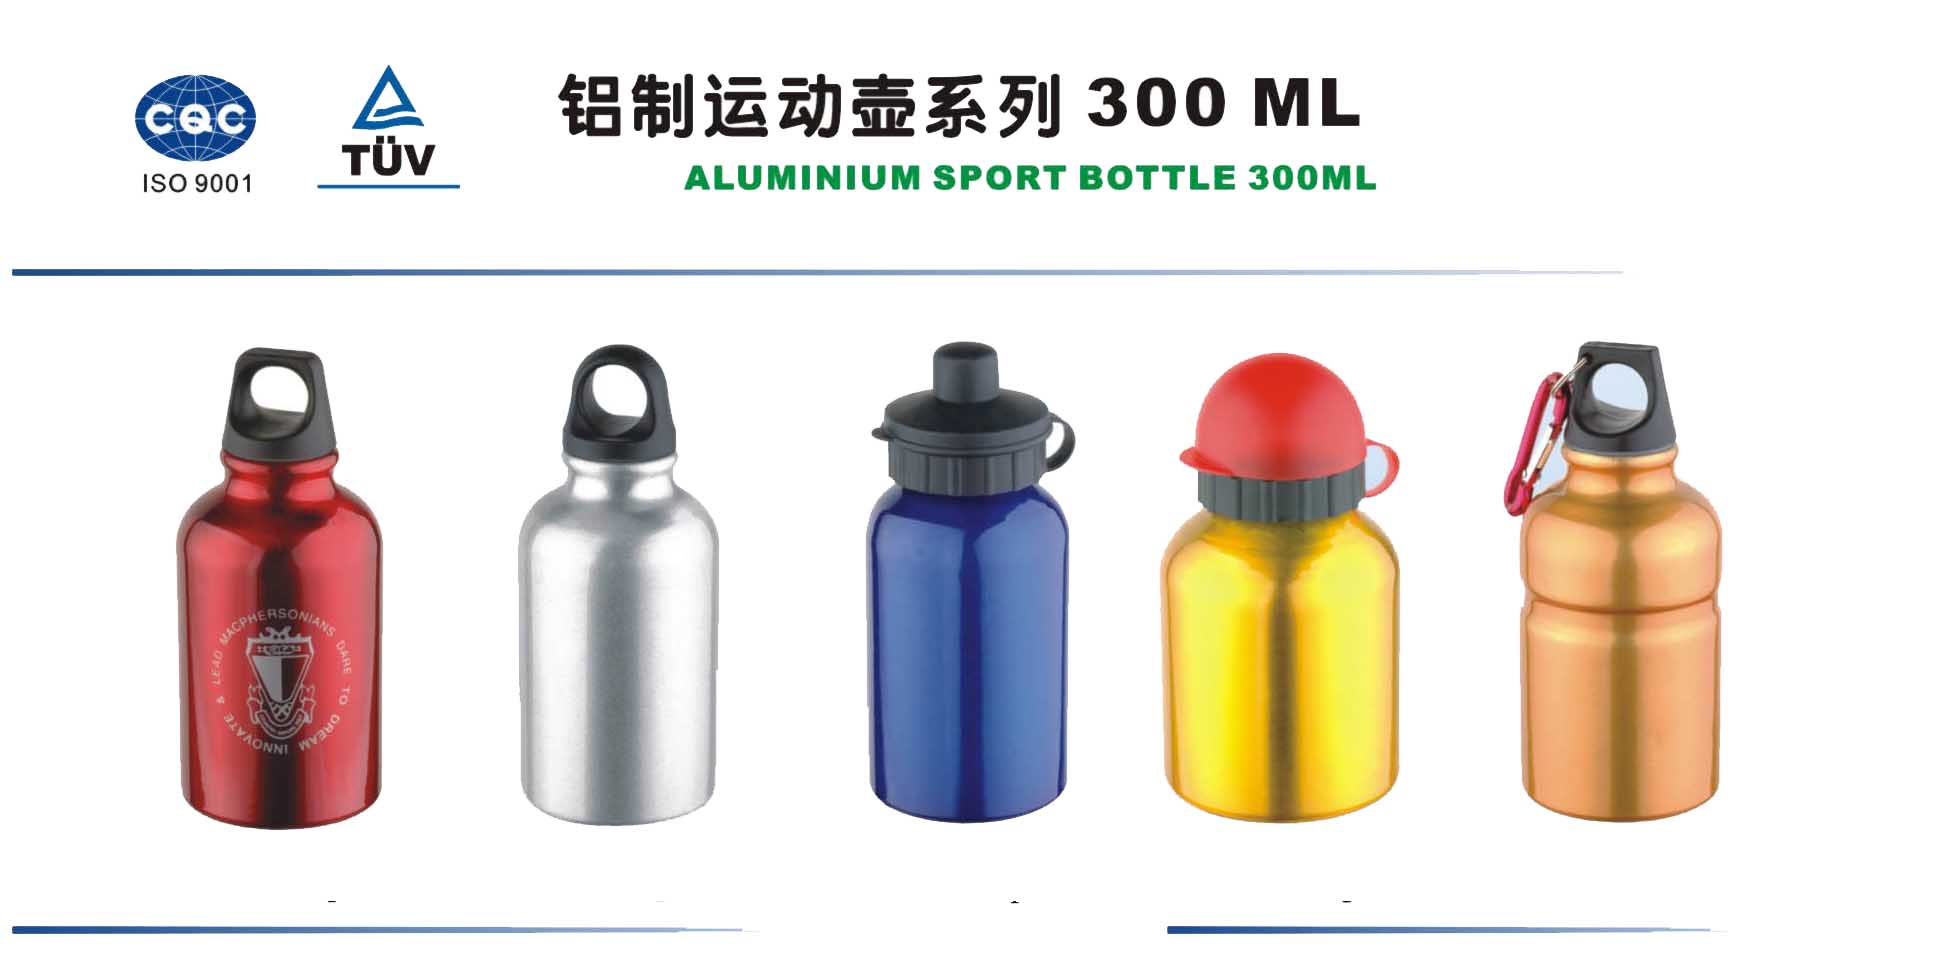  Aluminum Bottle 300ml (Алюминиевая бутылка 300 мл)